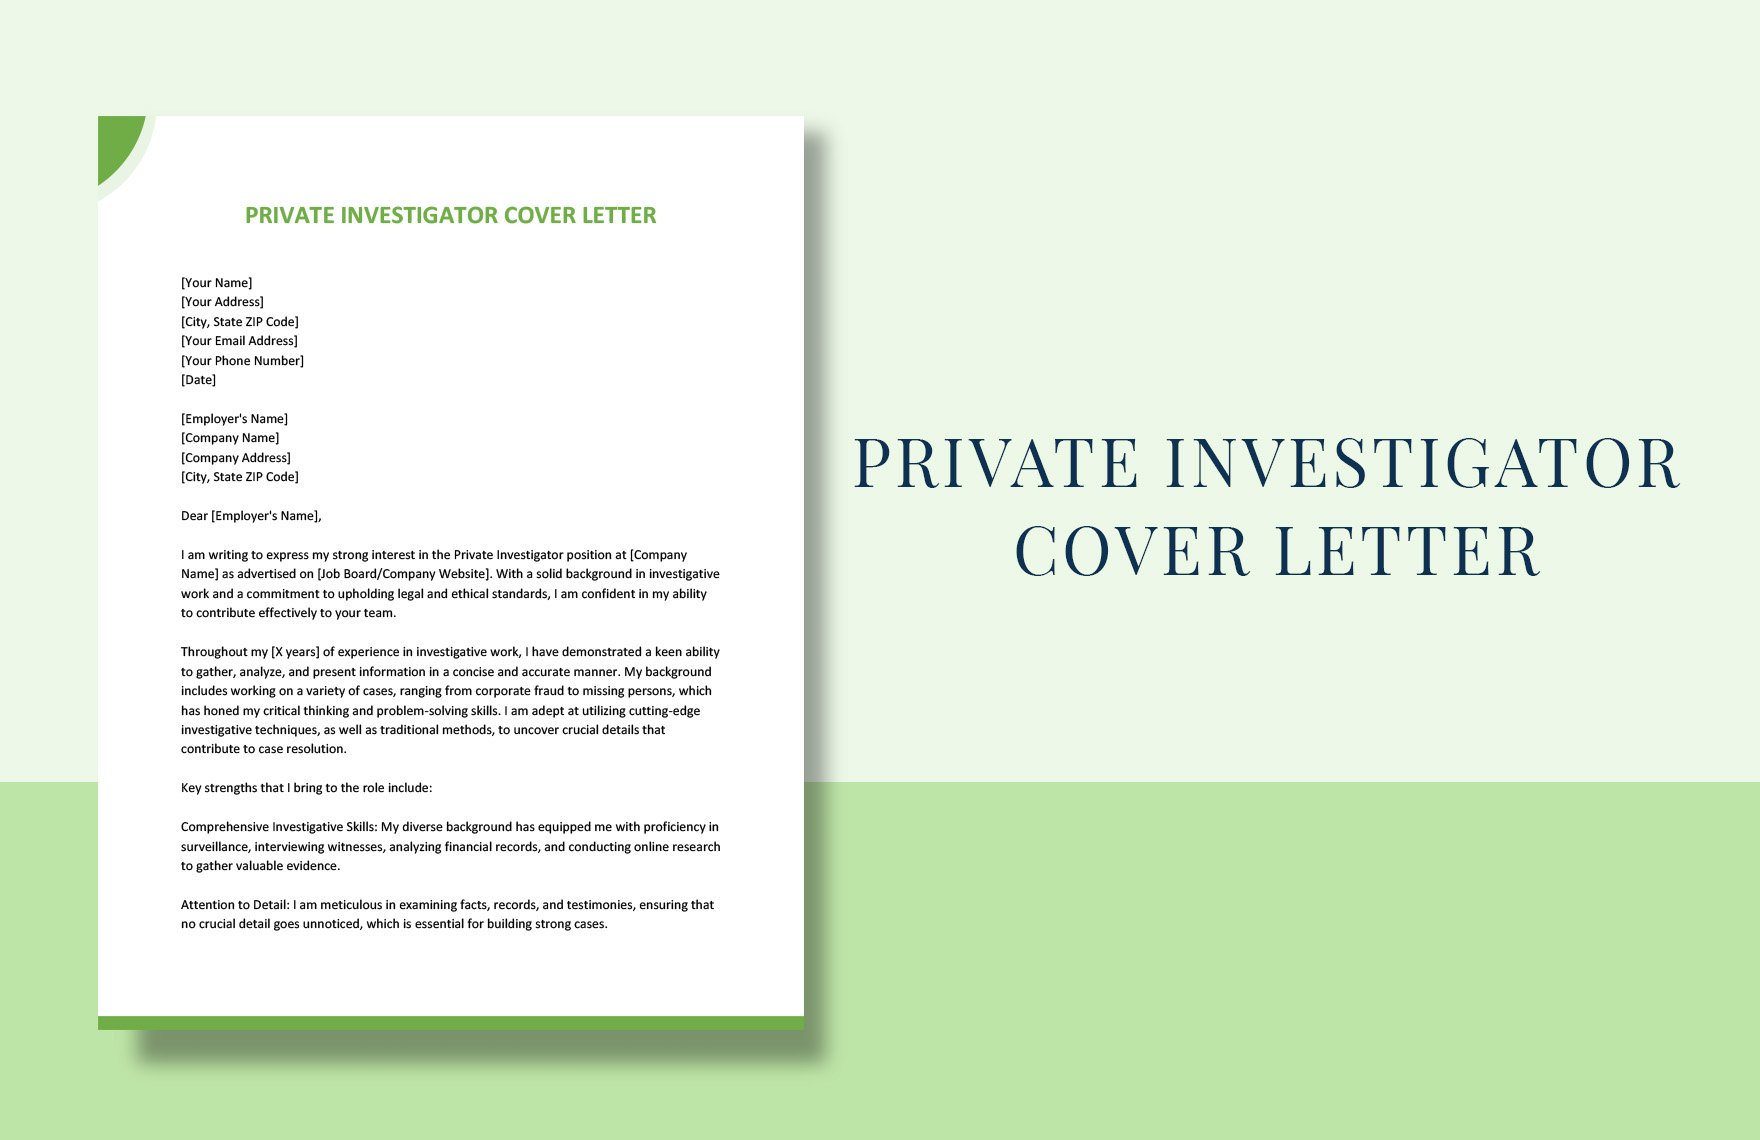 Private Investigator Cover Letter in Word, Google Docs